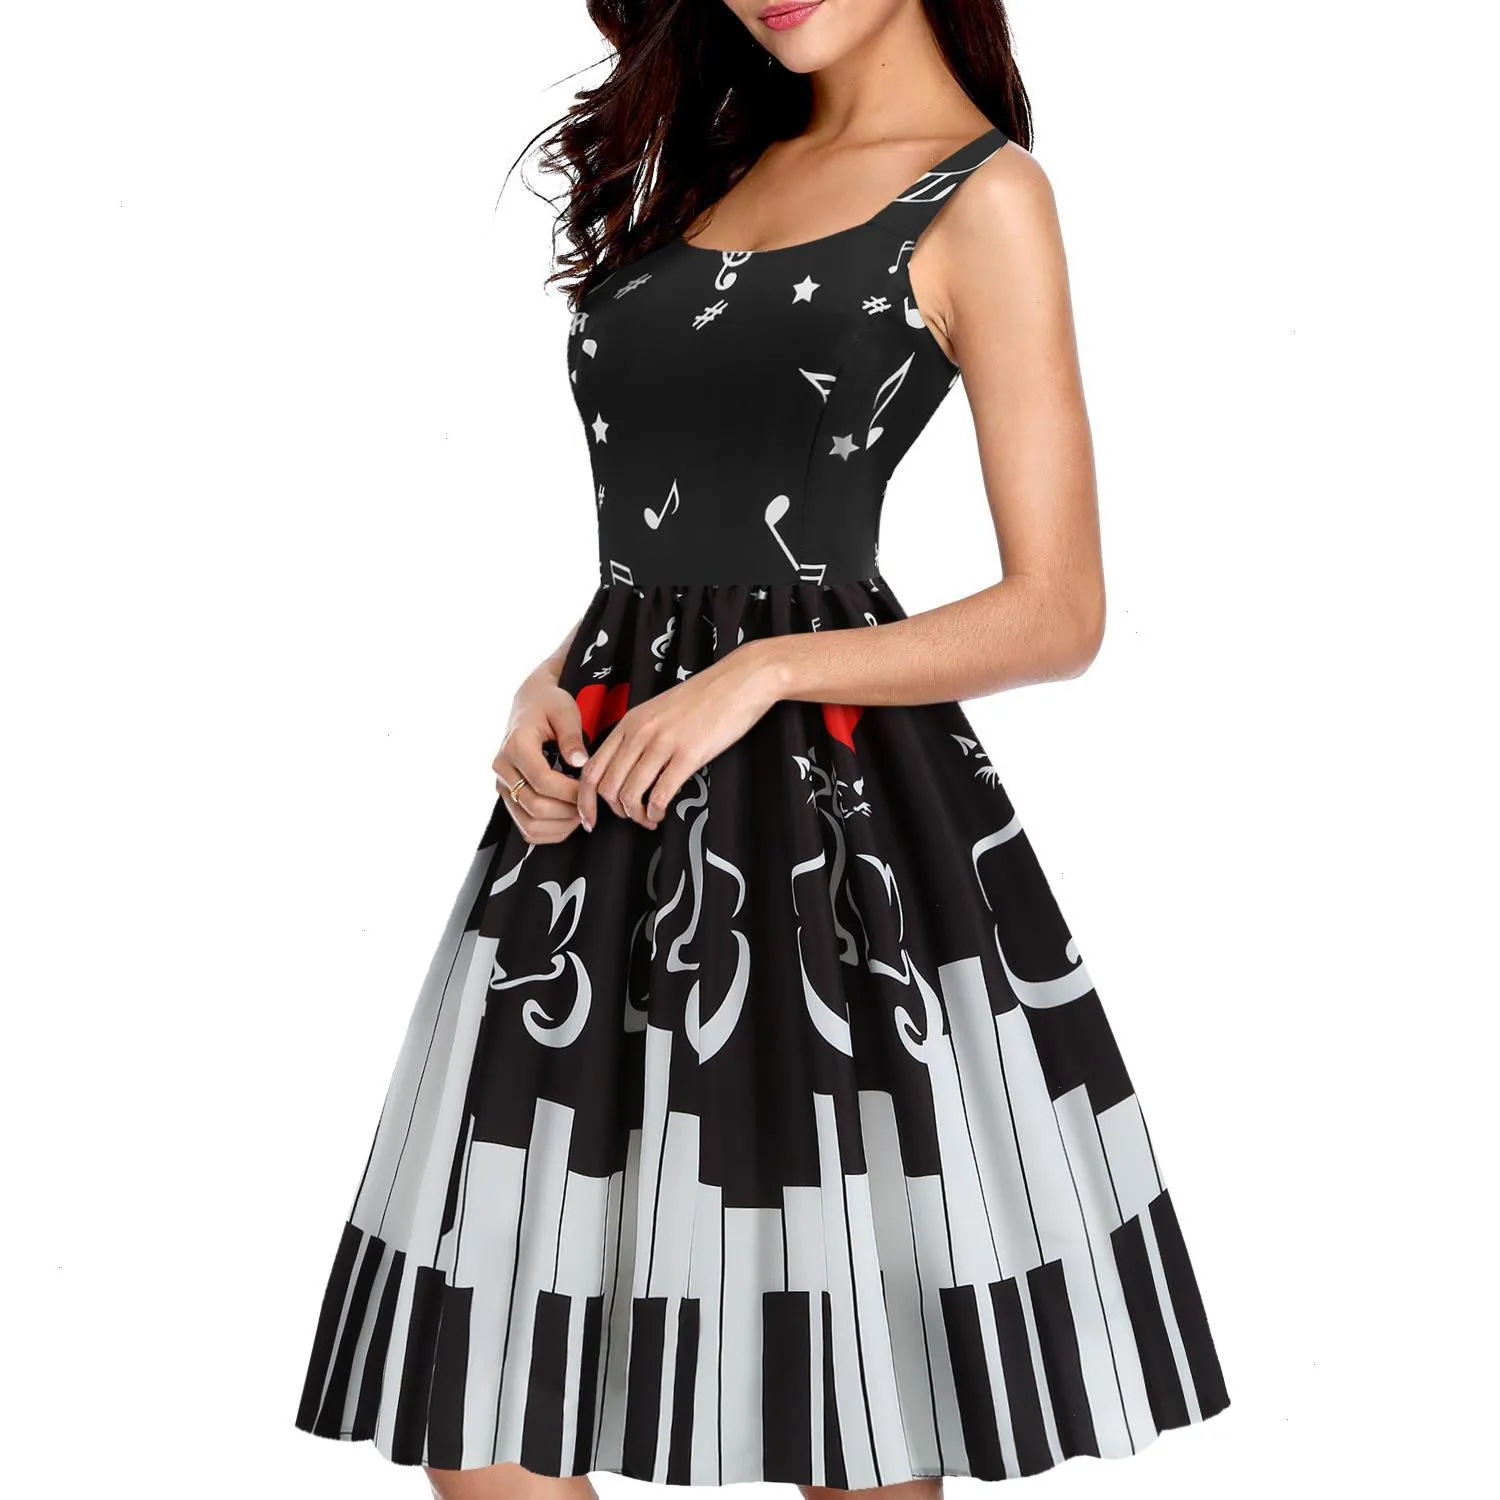 Elegante casual damesvest stikselmuzieknoot muziekscore bedrukte grote swing jurk